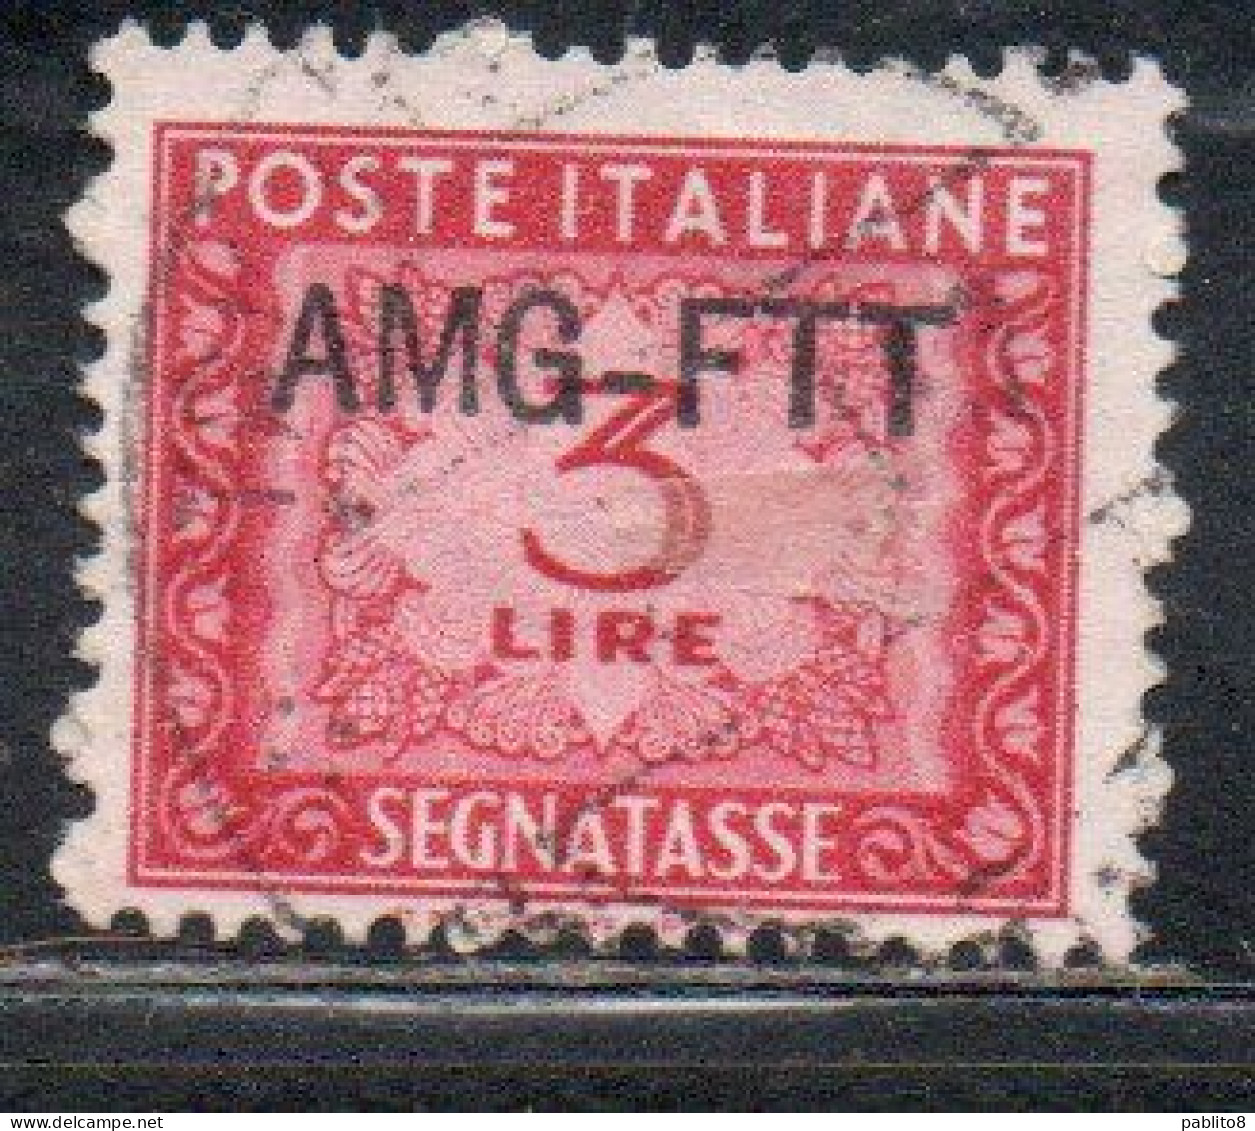 TRIESTE A 1949 1954AMG-FTT SOPRASTAMPATO D'ITALIA ITALY OVERPRINTED SEGNATASSE POSTAGE DUE TAXES TASSE LIRE 3 USATO USED - Taxe